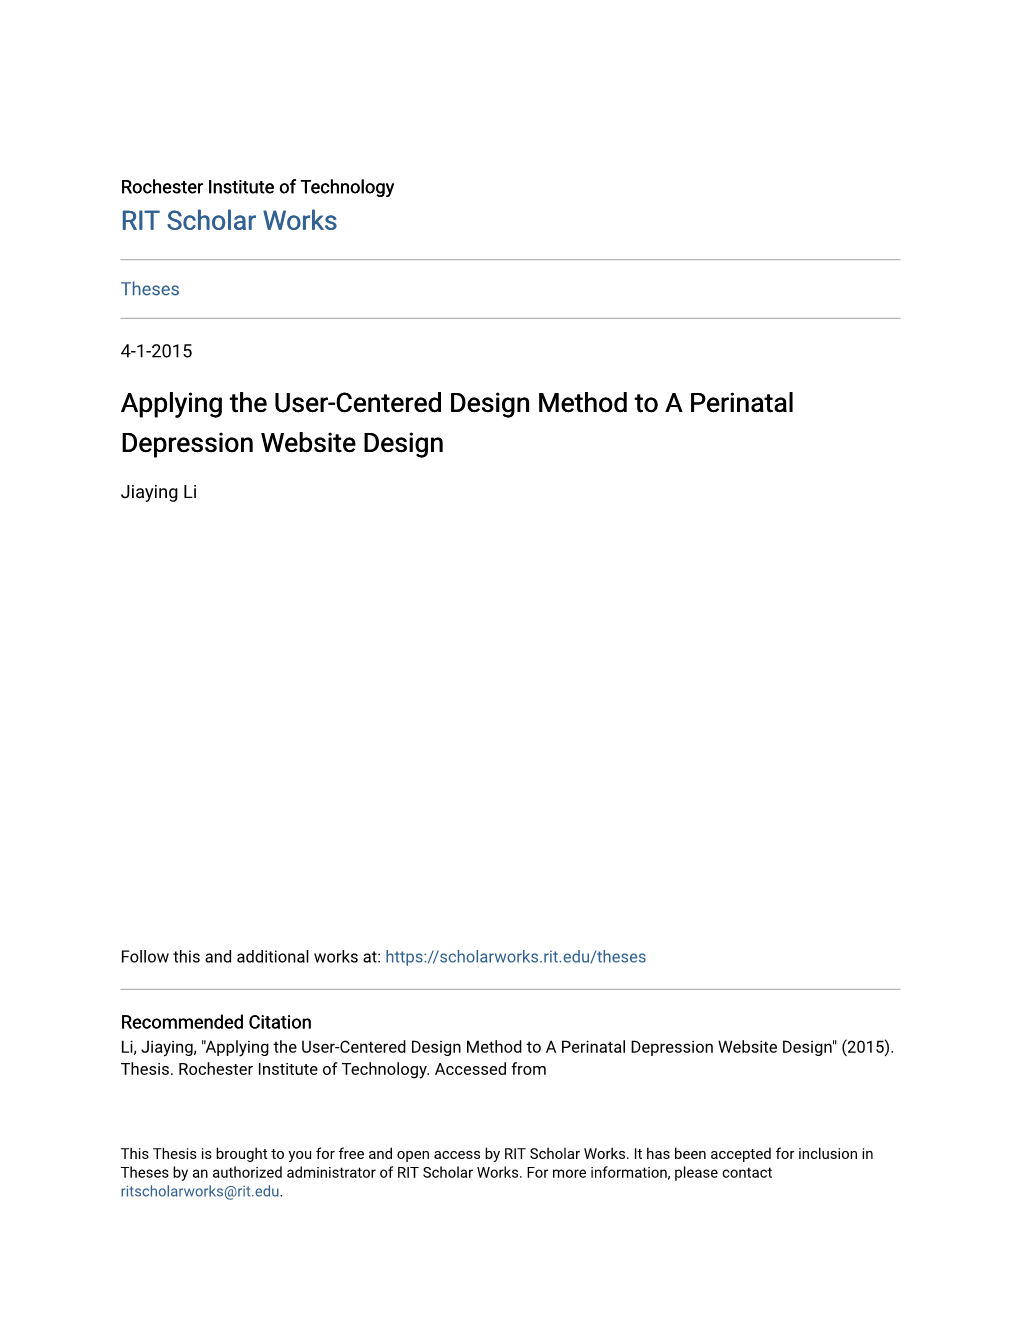 Applying the User-Centered Design Method to a Perinatal Depression Website Design